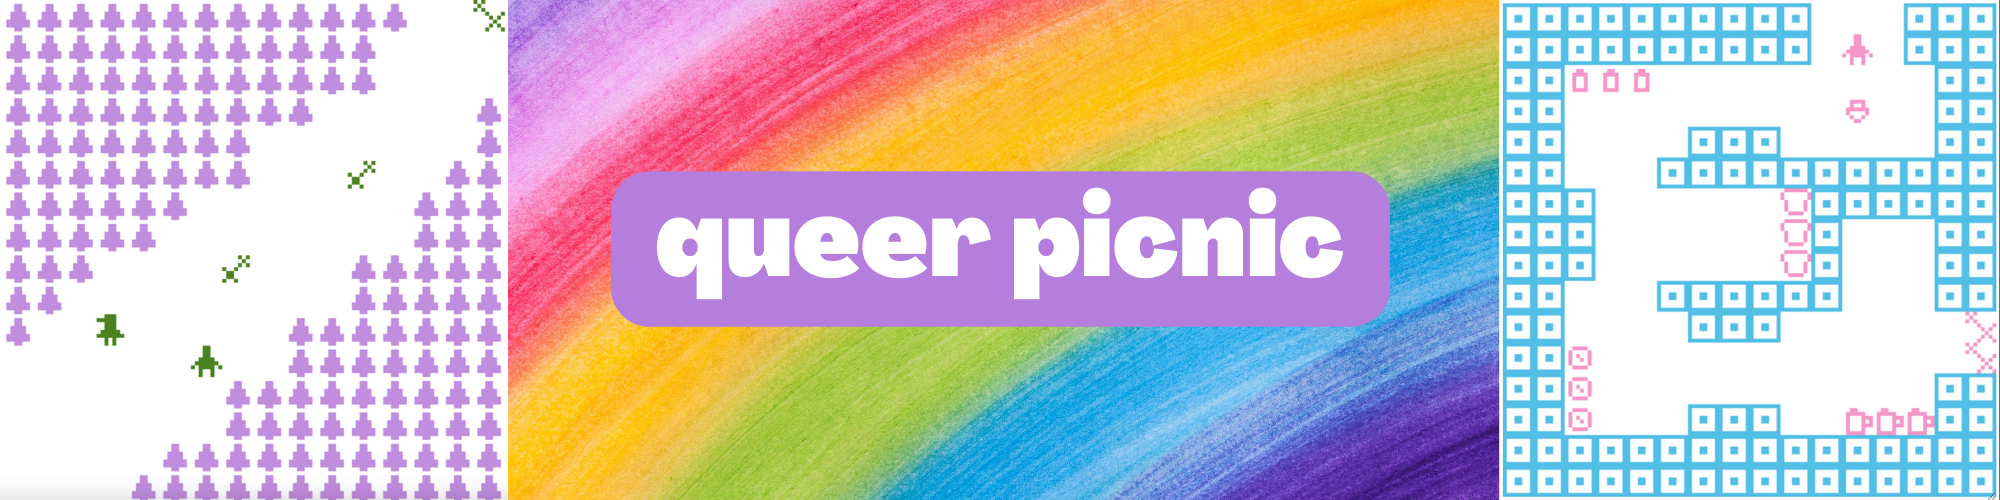 queer picnic